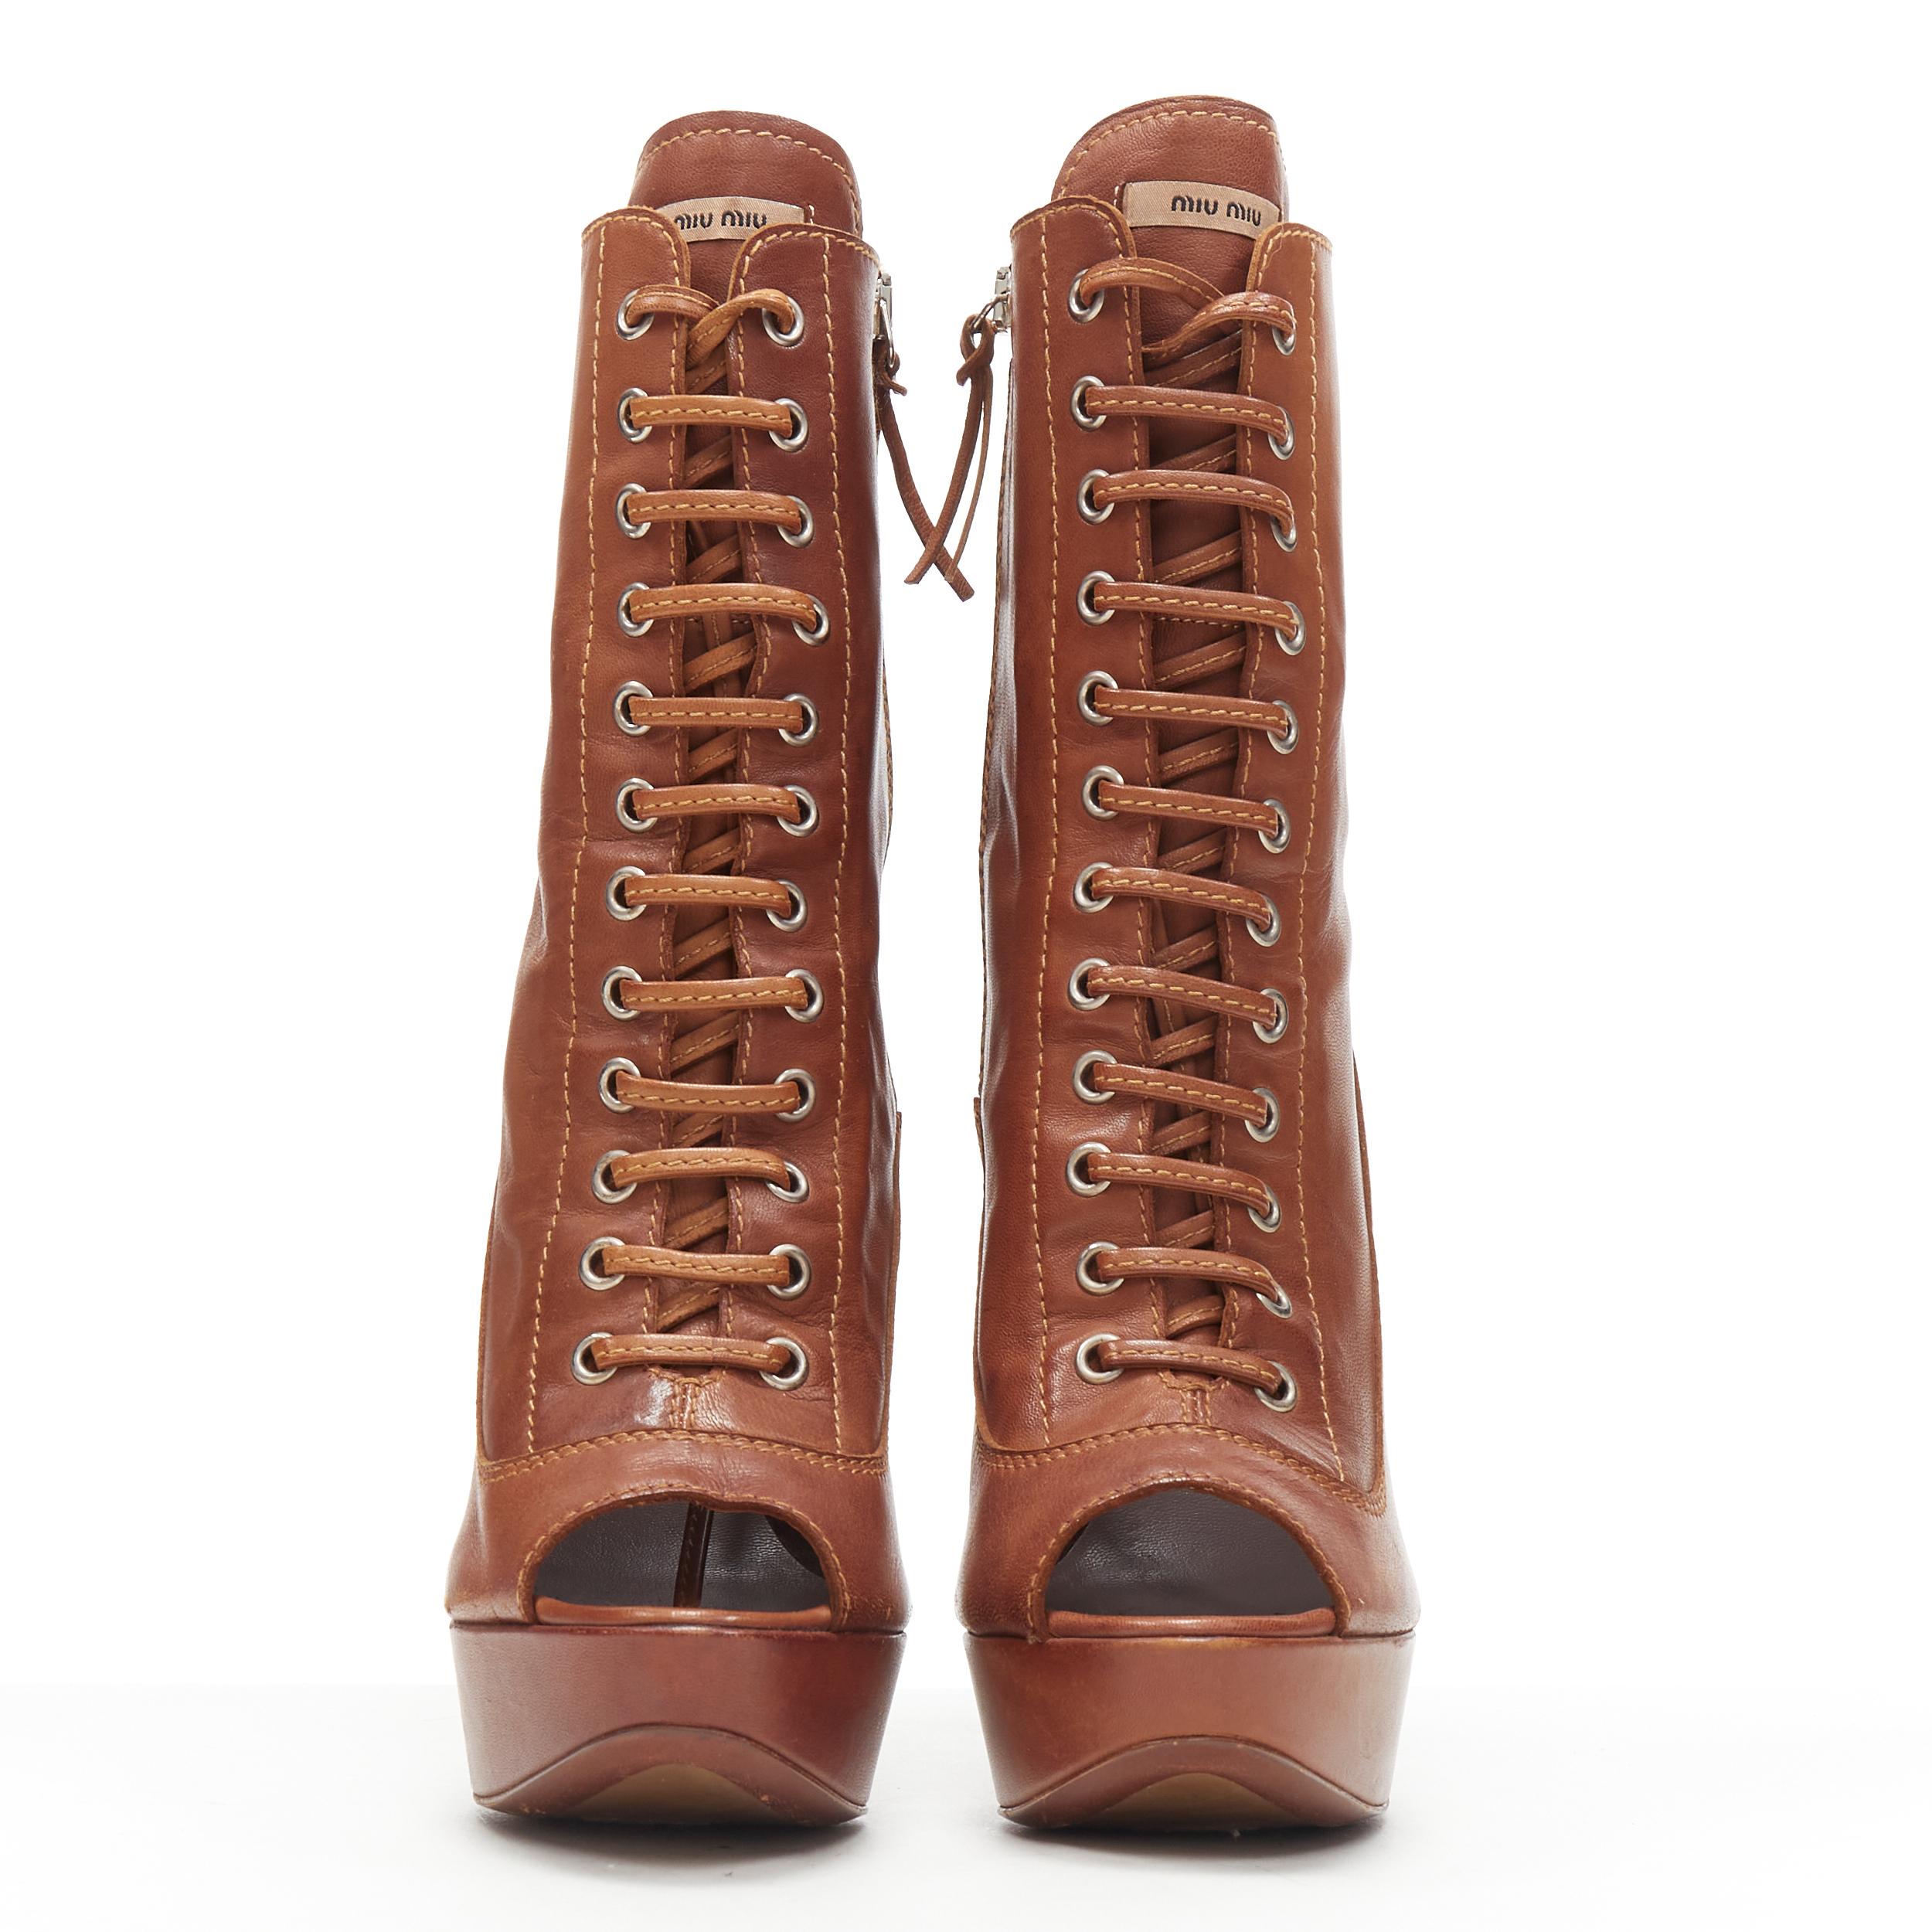 MIU Stiefel mit hohem Absatz aus braunem Leder und Peep Toe EU37,5 (Braun)